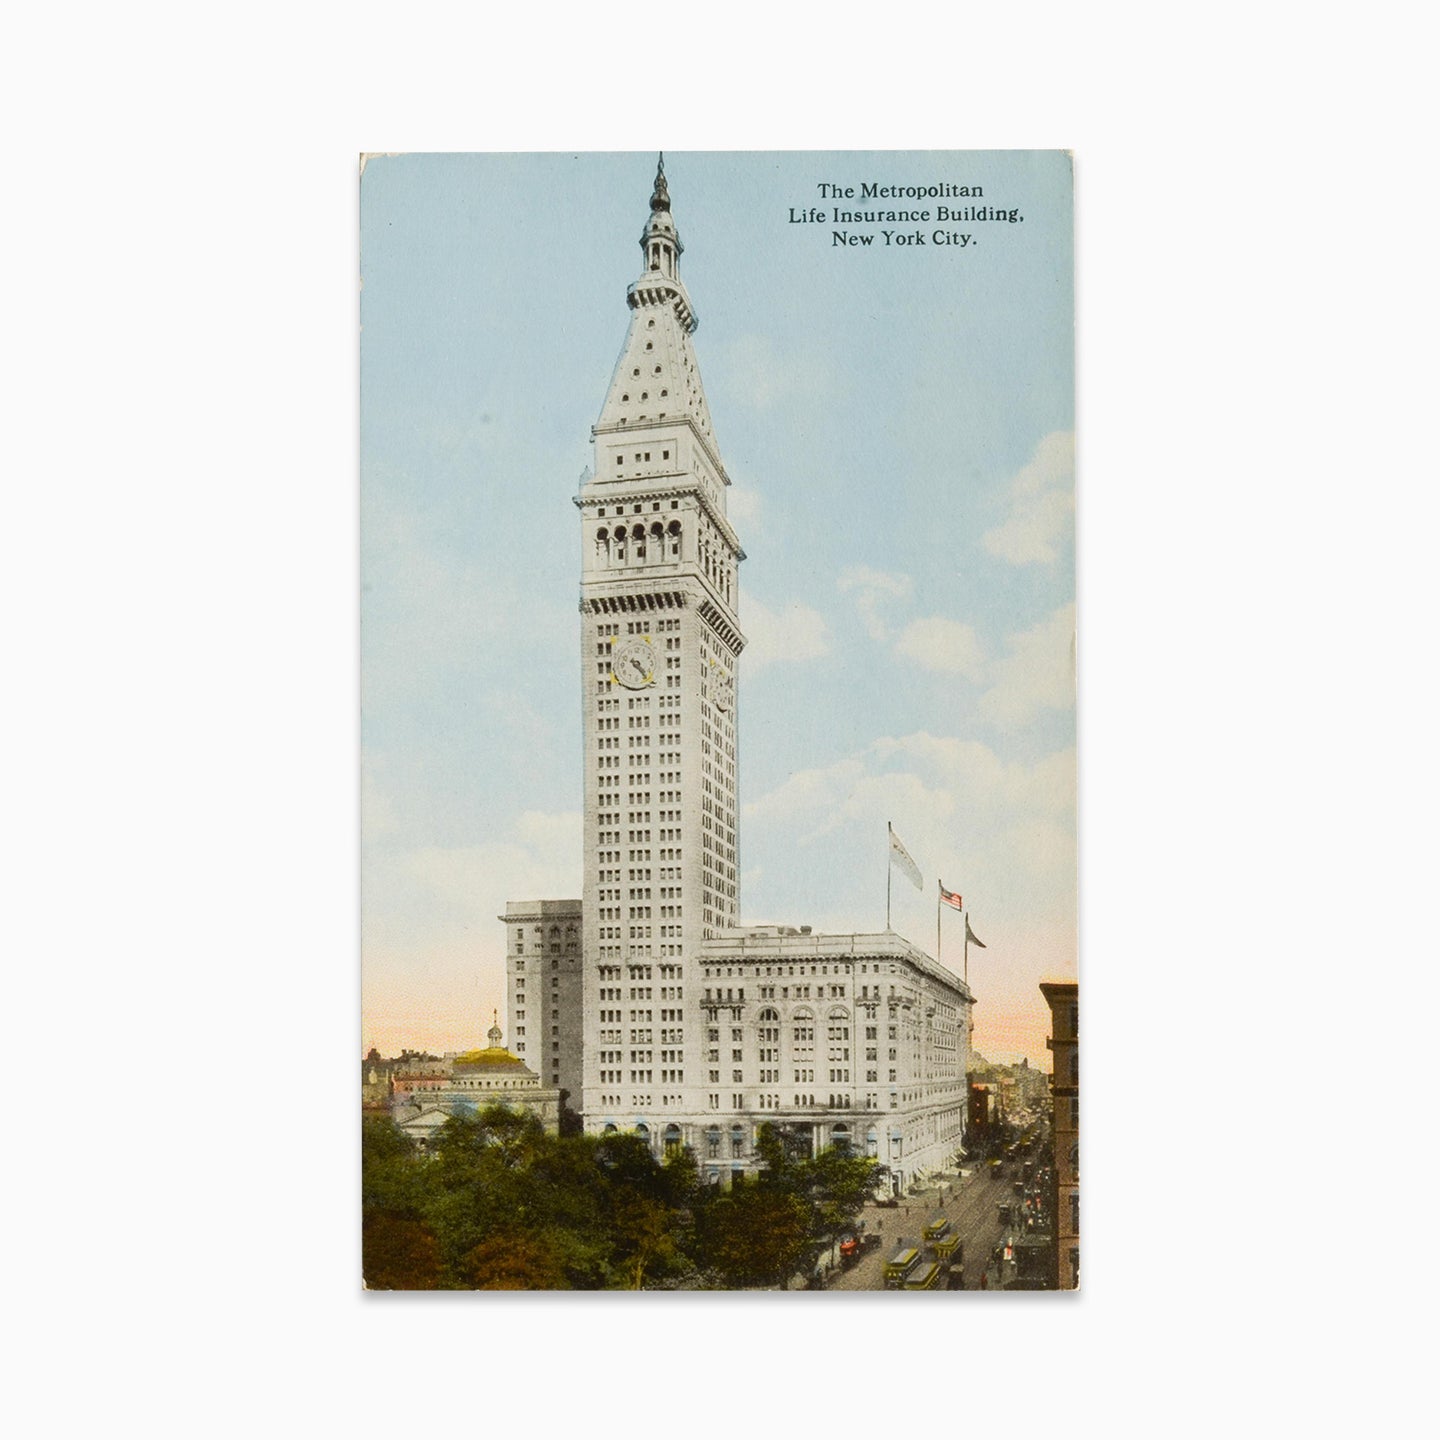 Vintage Post Card - The Metropolitan Life Insurance Building